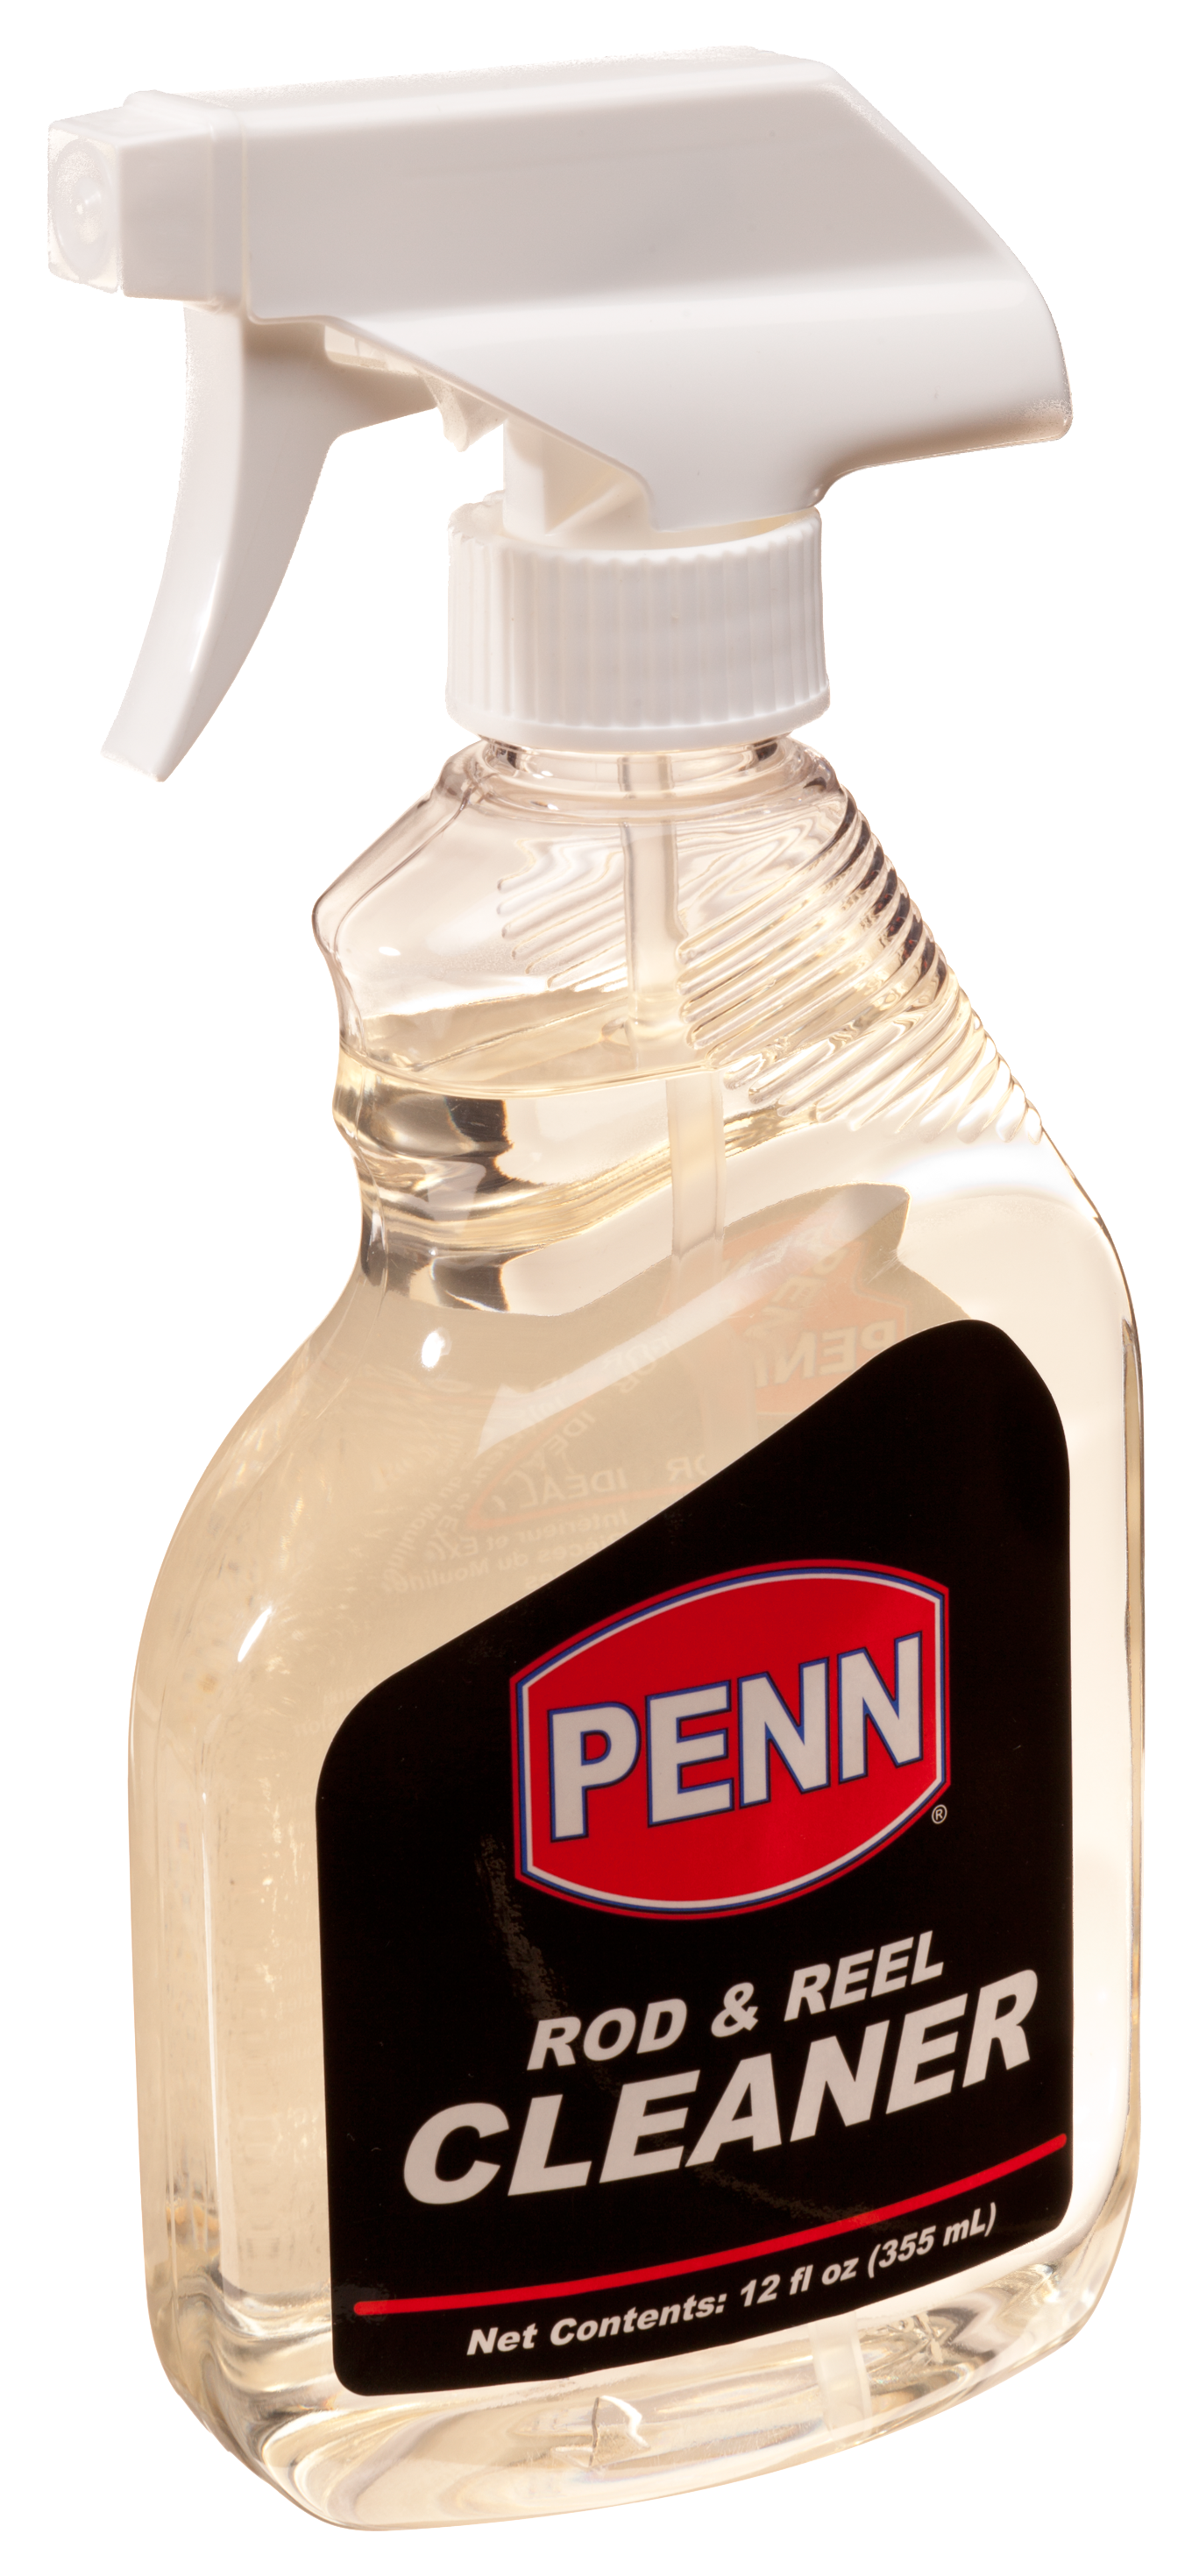 Penn - Rod and Reel Cleaner, 12 oz